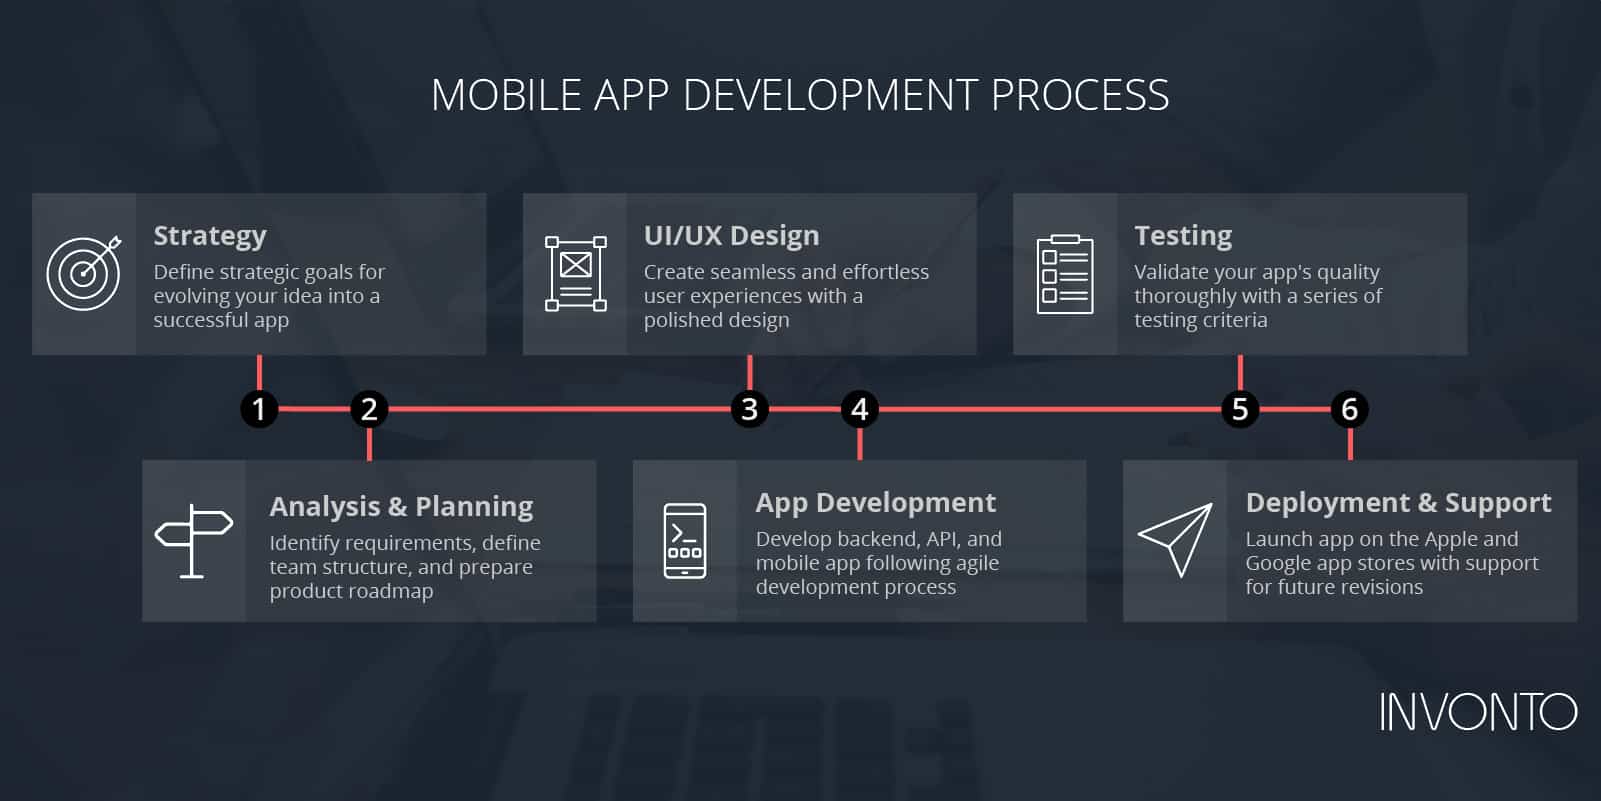 Invonto Dev Process Flow | Mobile App Development Process: A Step-by-Step Guide